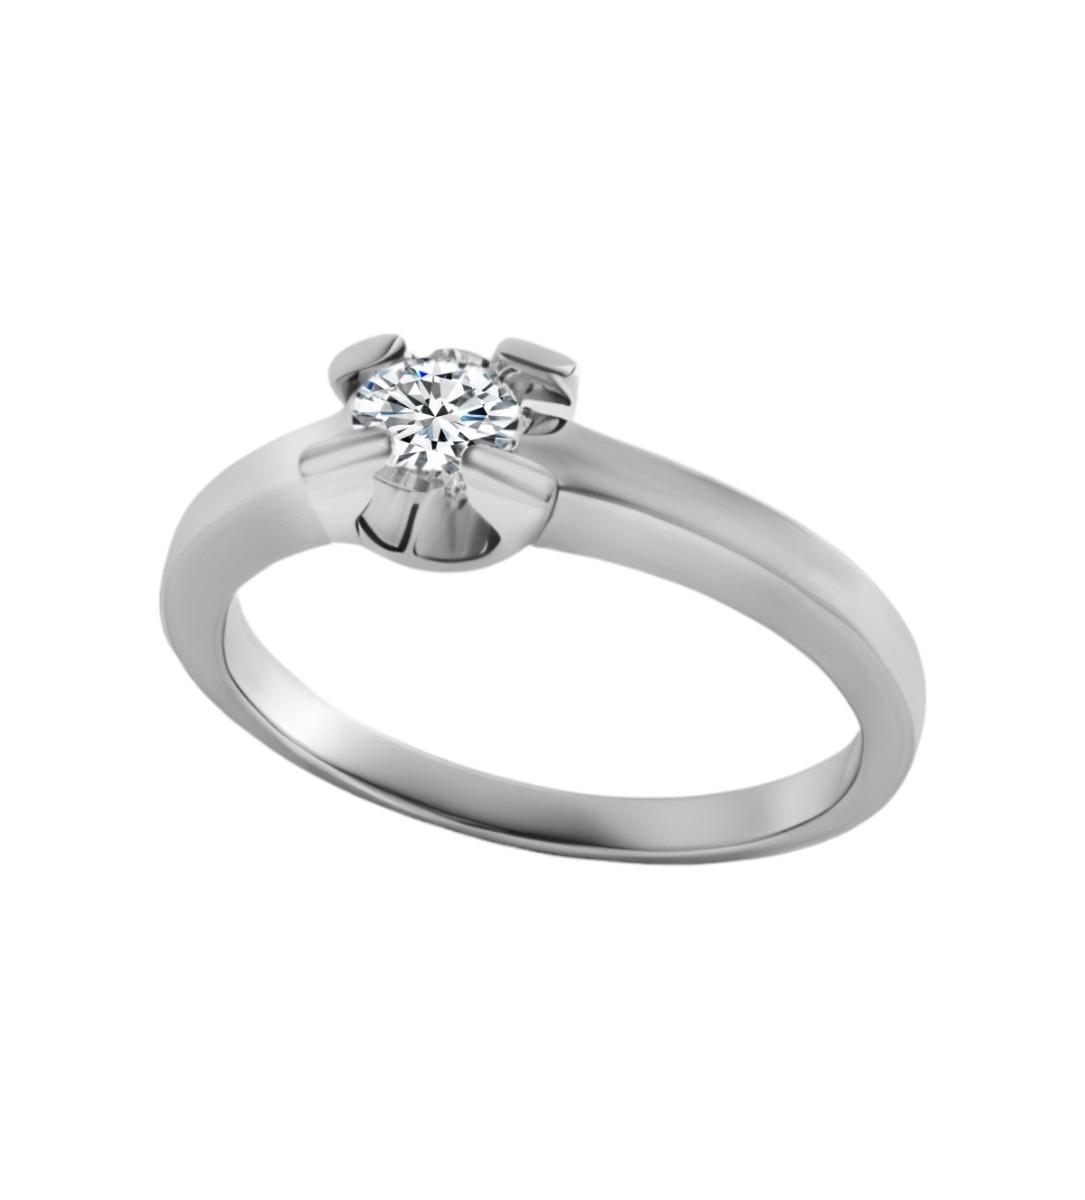 anillo compromiso de platino con diamante precio muy barato especial joyeria online